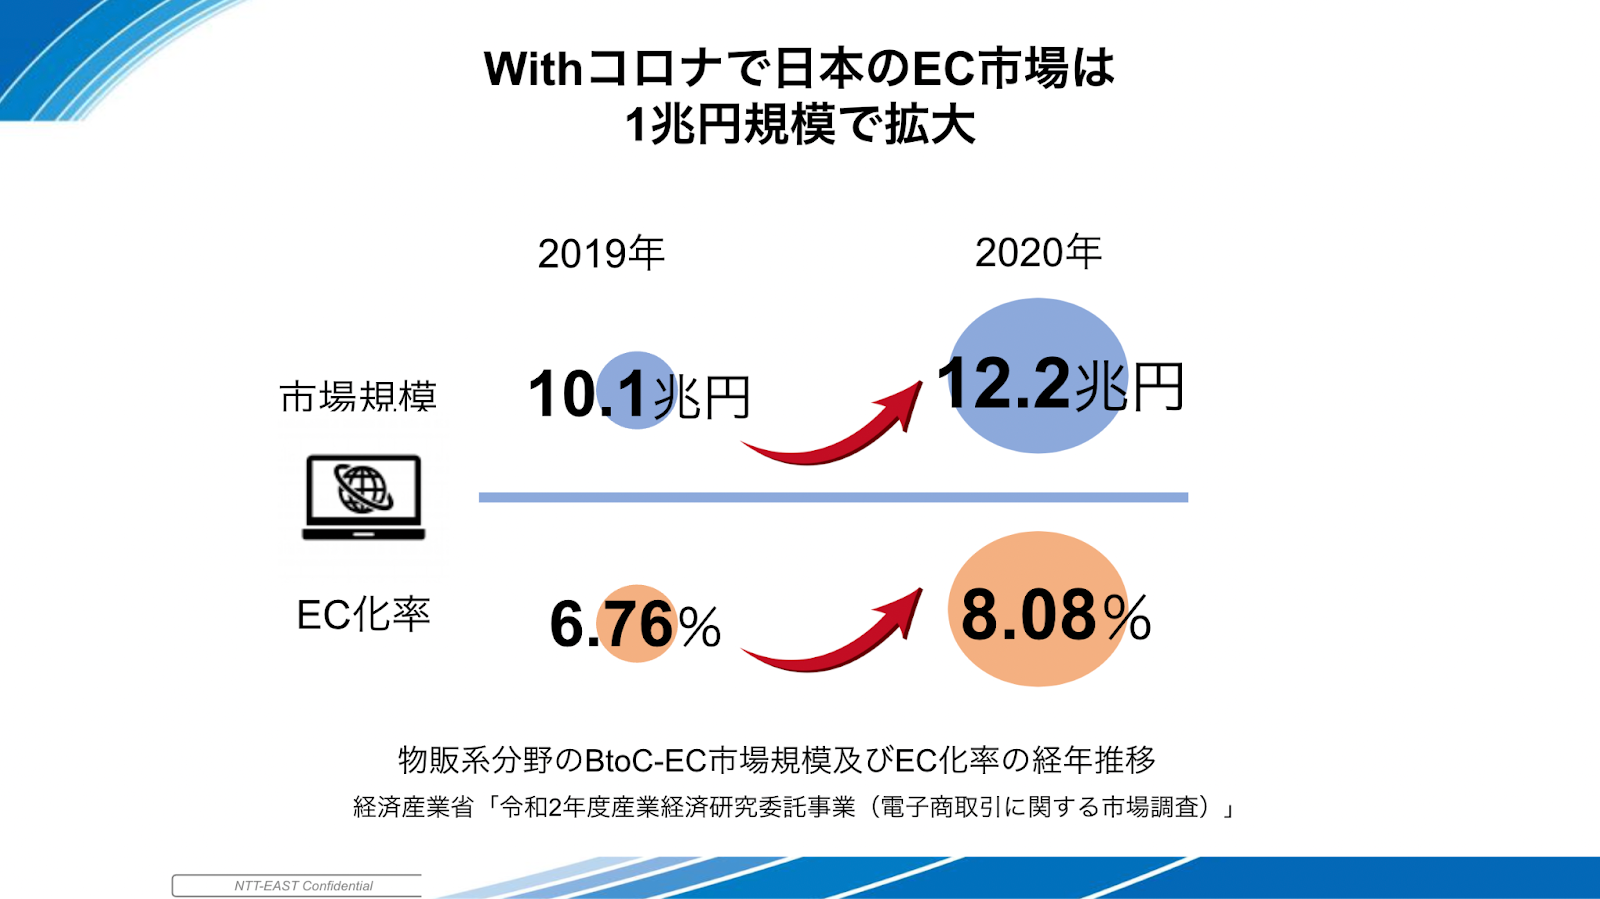 Withコロナで日本のEC市場は1兆円規模で拡大